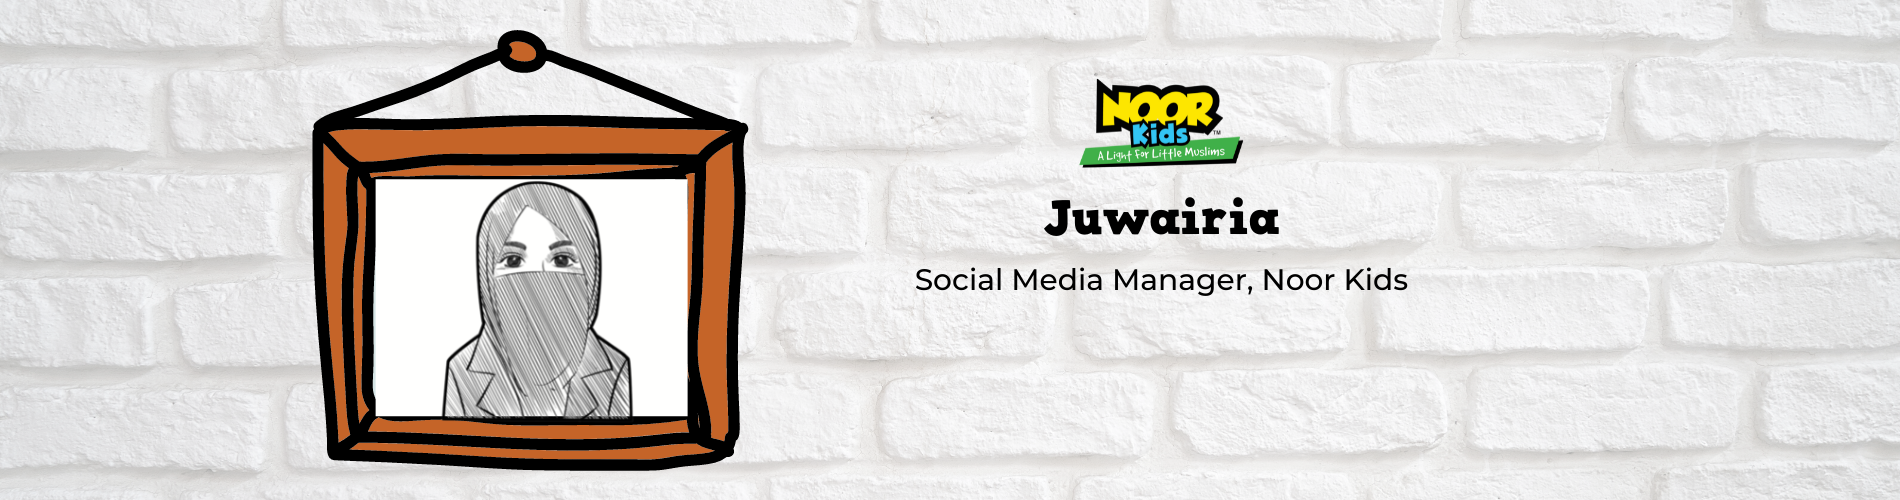 Meet Juwairia, Social Media Manager at Noor Kids